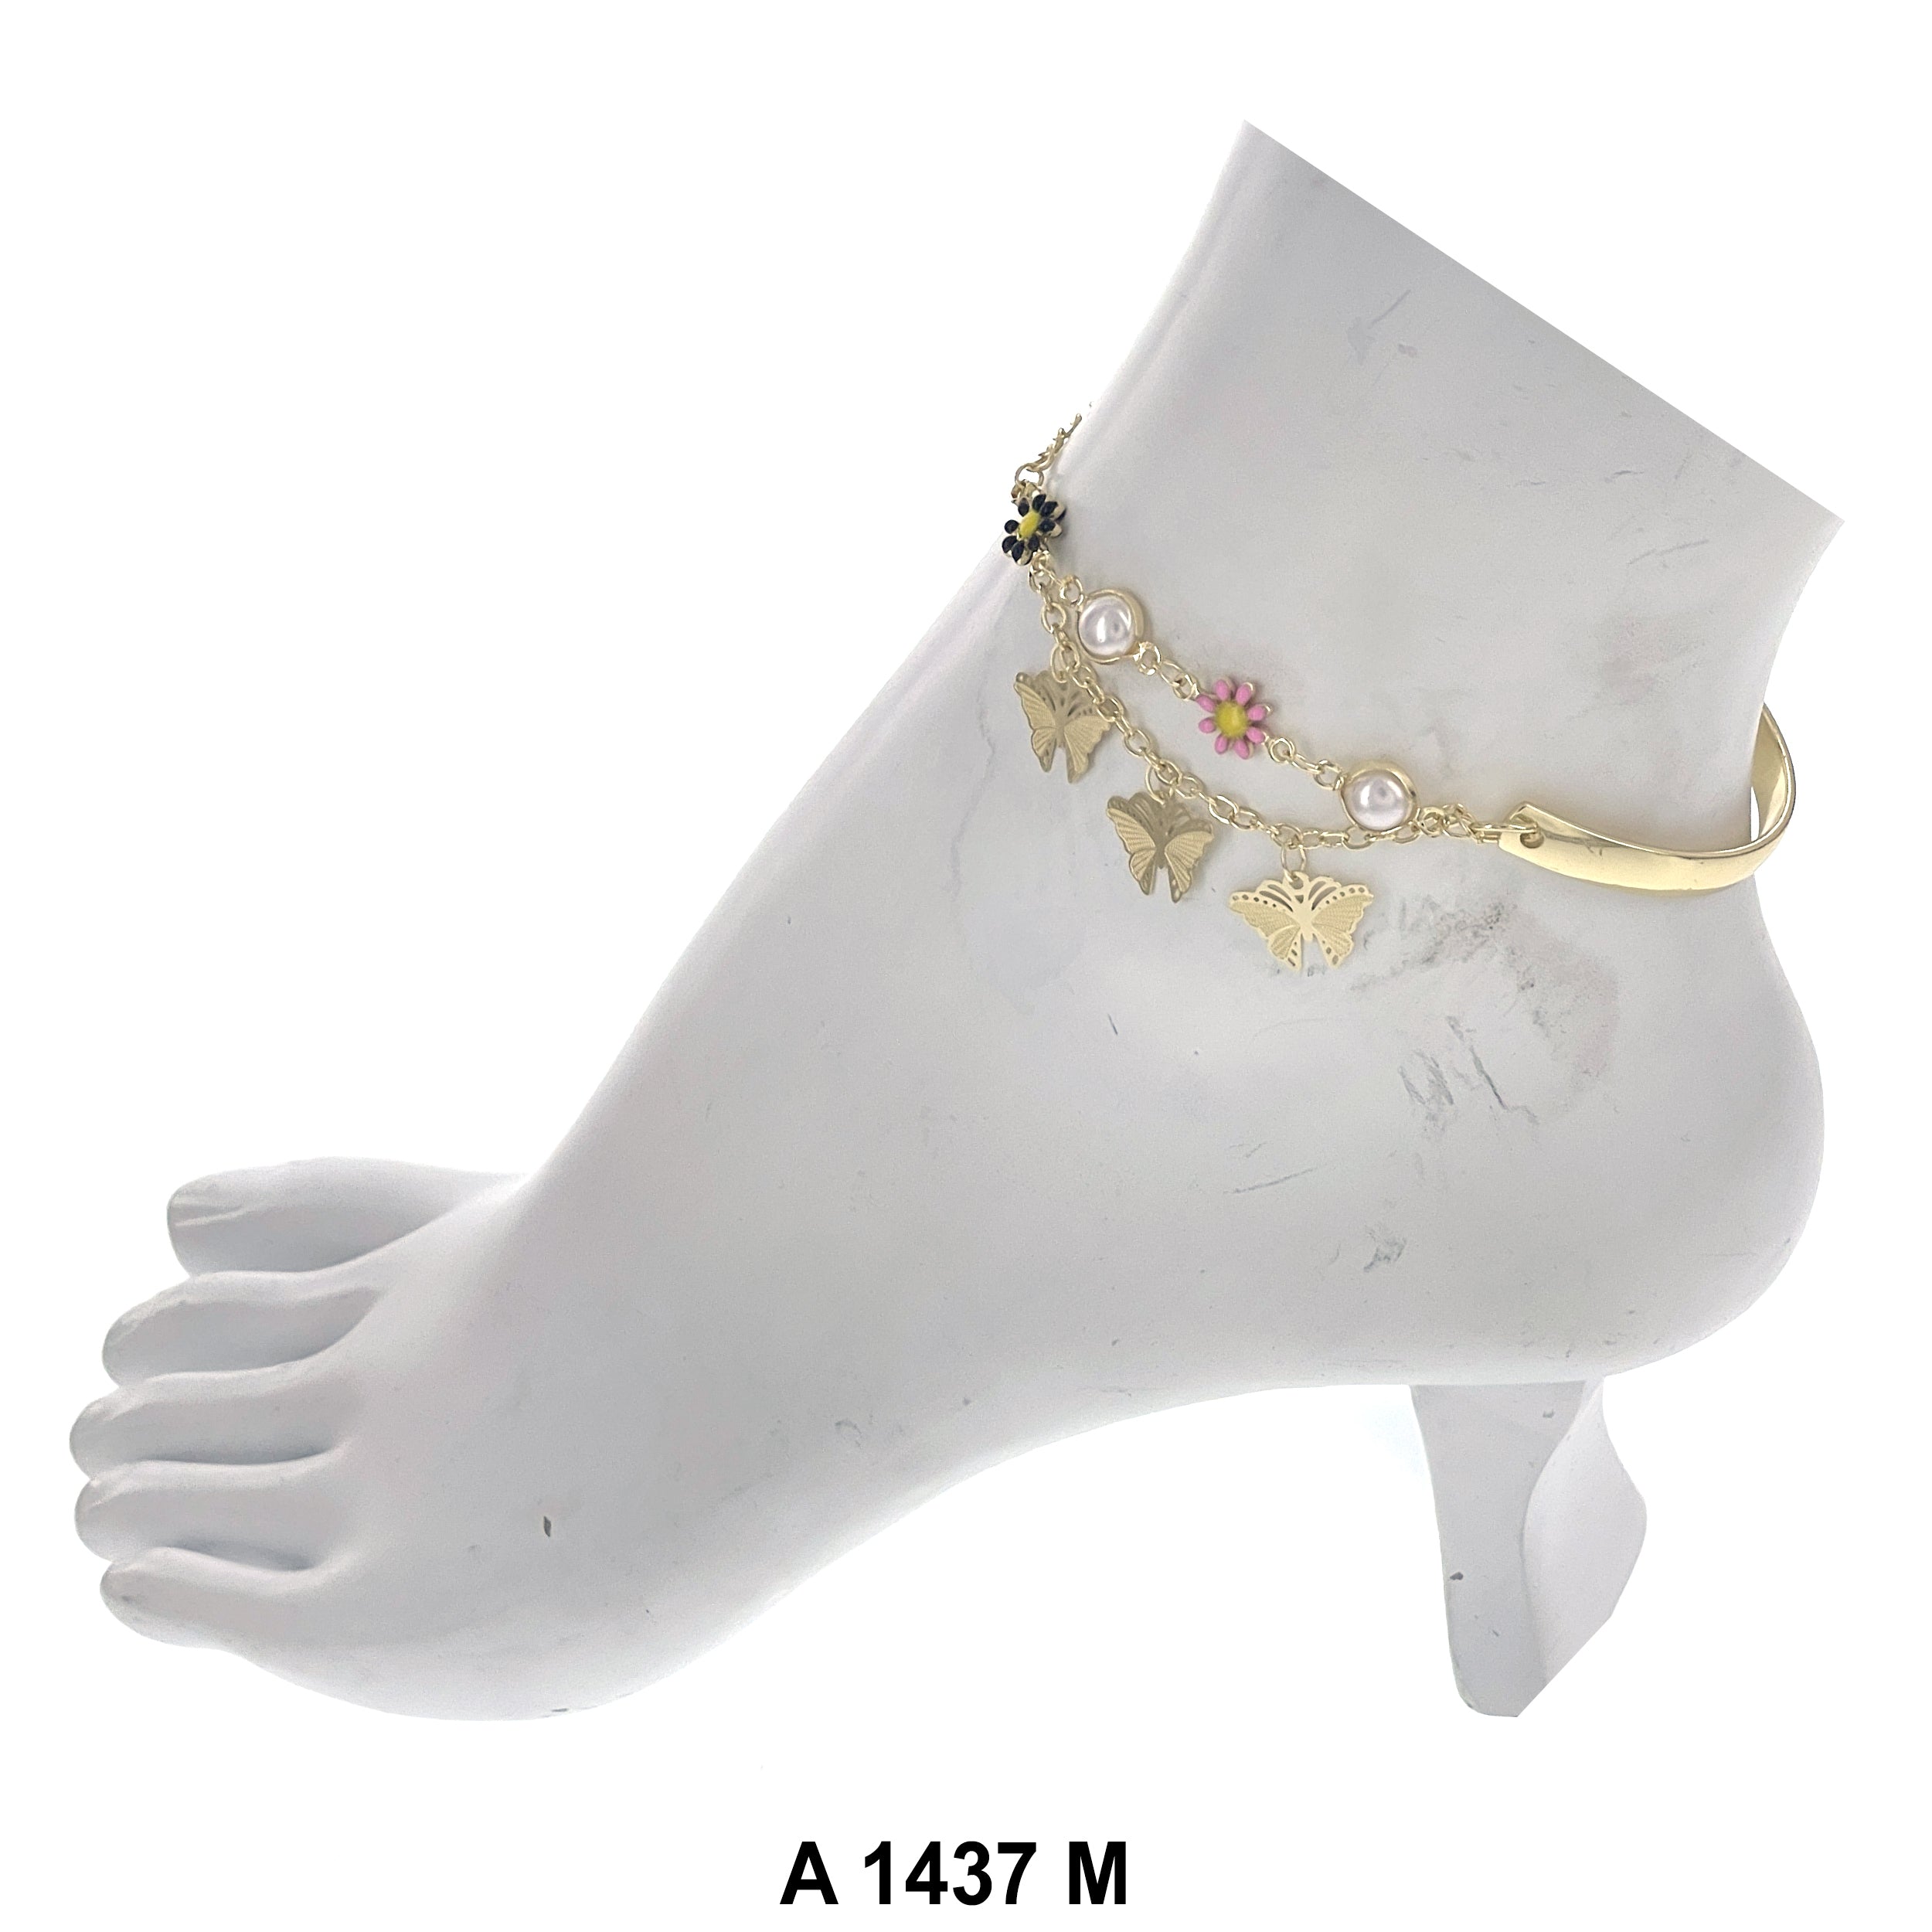 Fashion Anklets A 1437 M